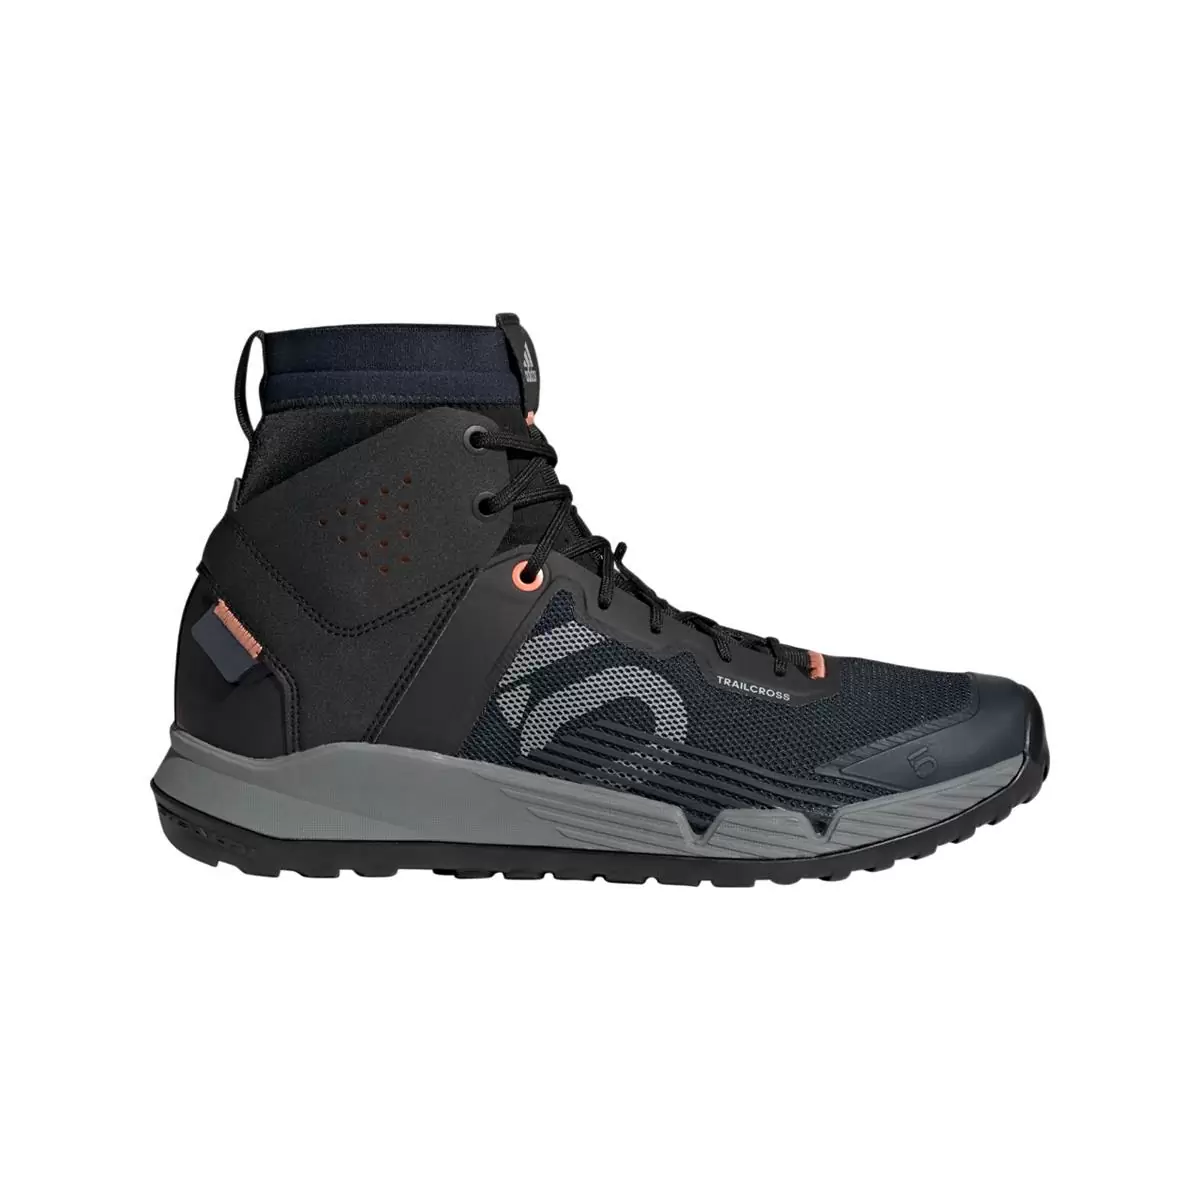 Flat 5.10 Trailcross Mid Pro MTB Shoes Black/Grey Size 40 - image